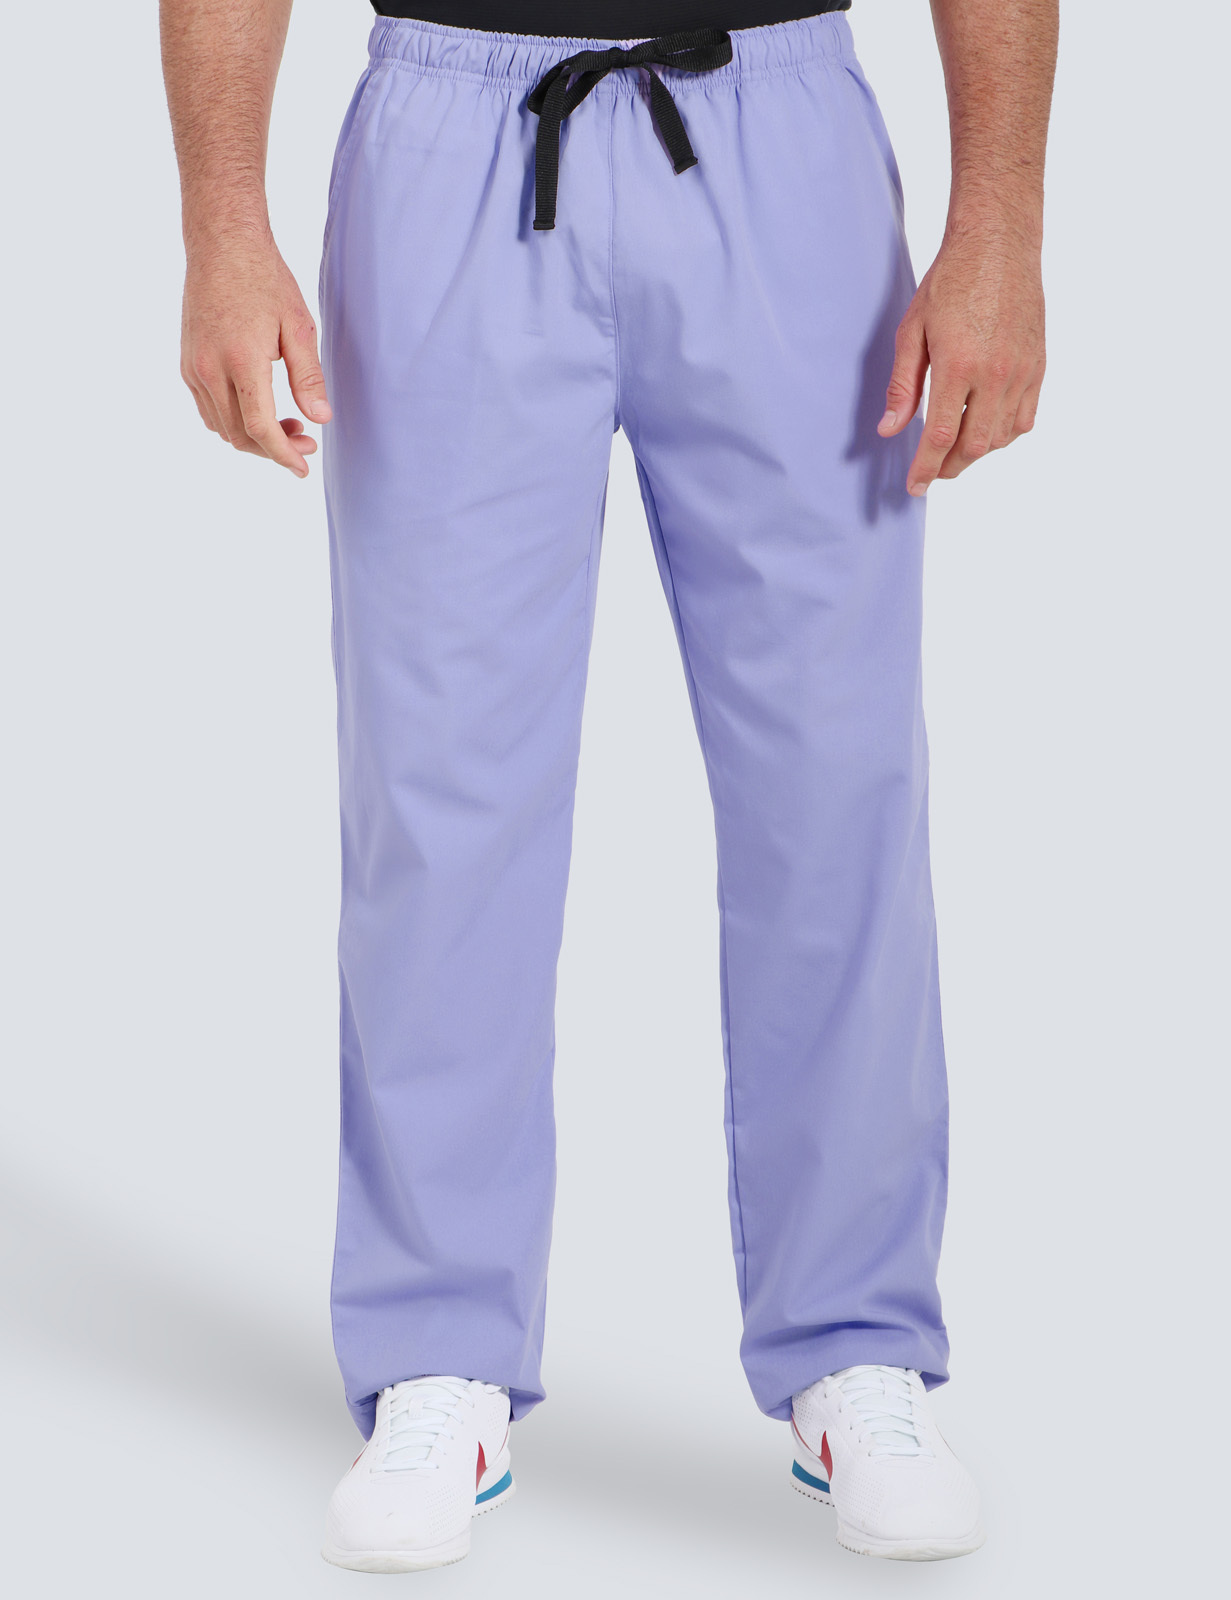 Men's Regular Cut Pants - Lilac - 2X Large